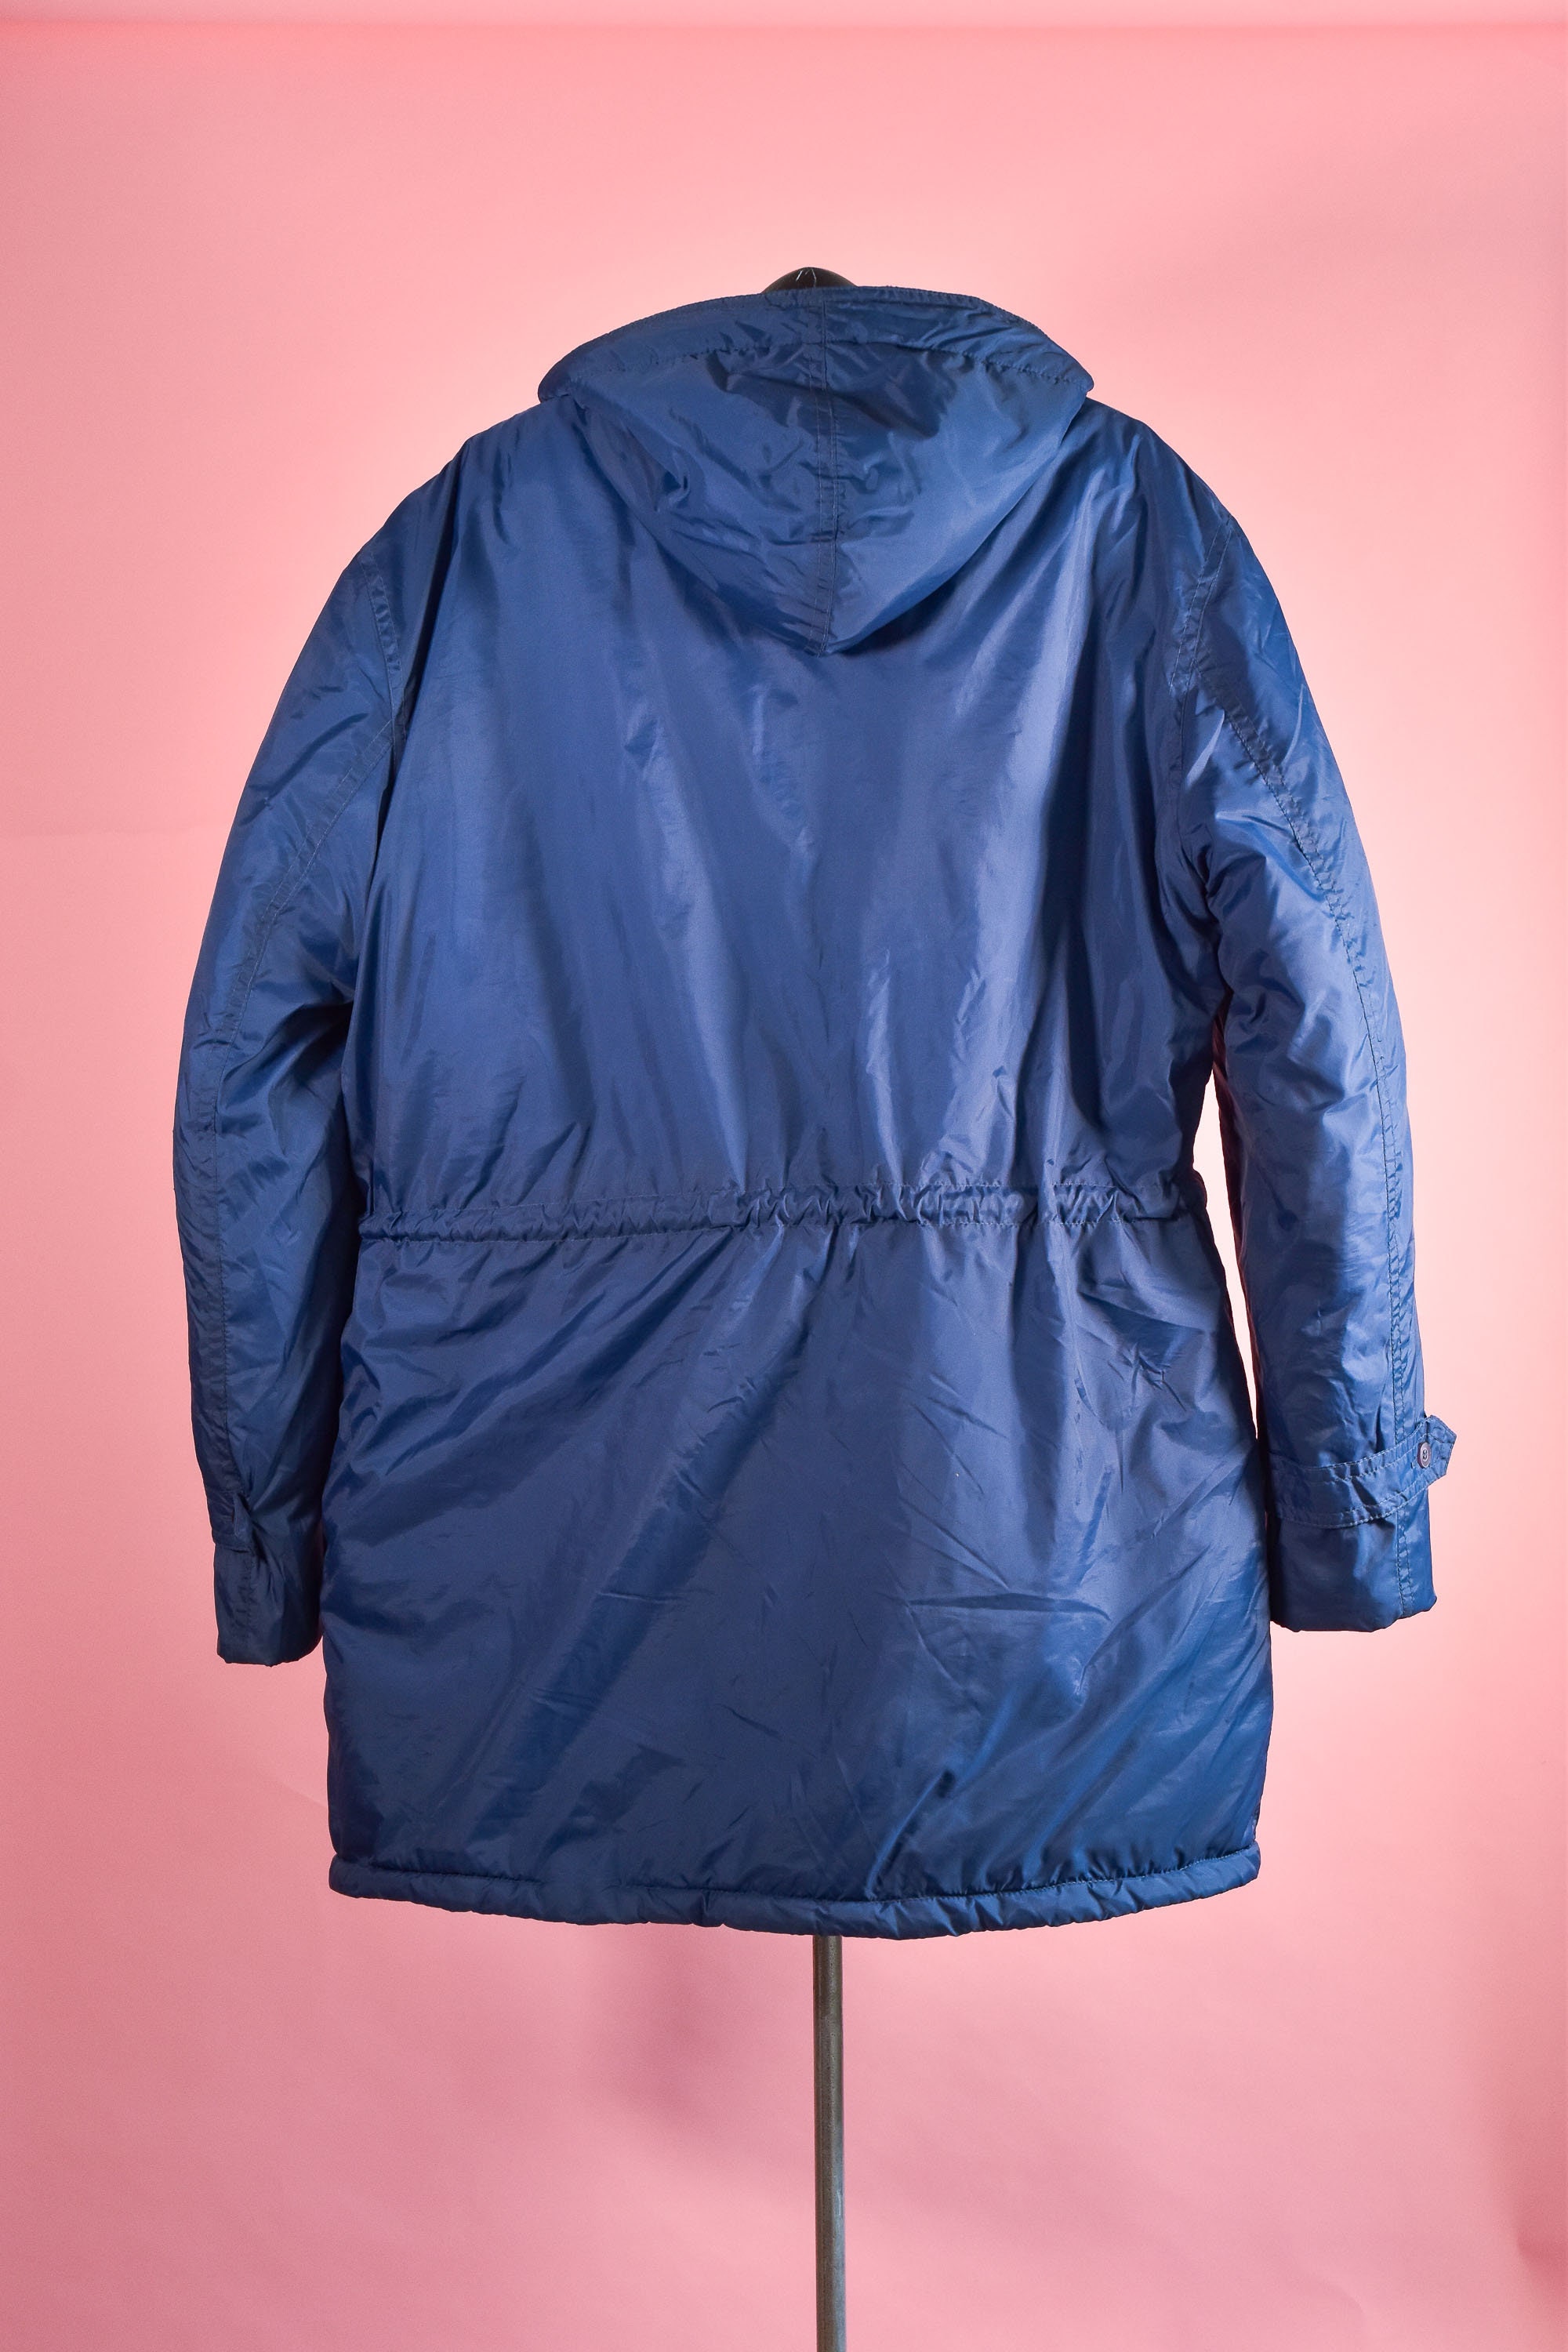 Vintage 1970s Navy Blue Anorak Waterproof Rain Jacket Size XL | Etsy